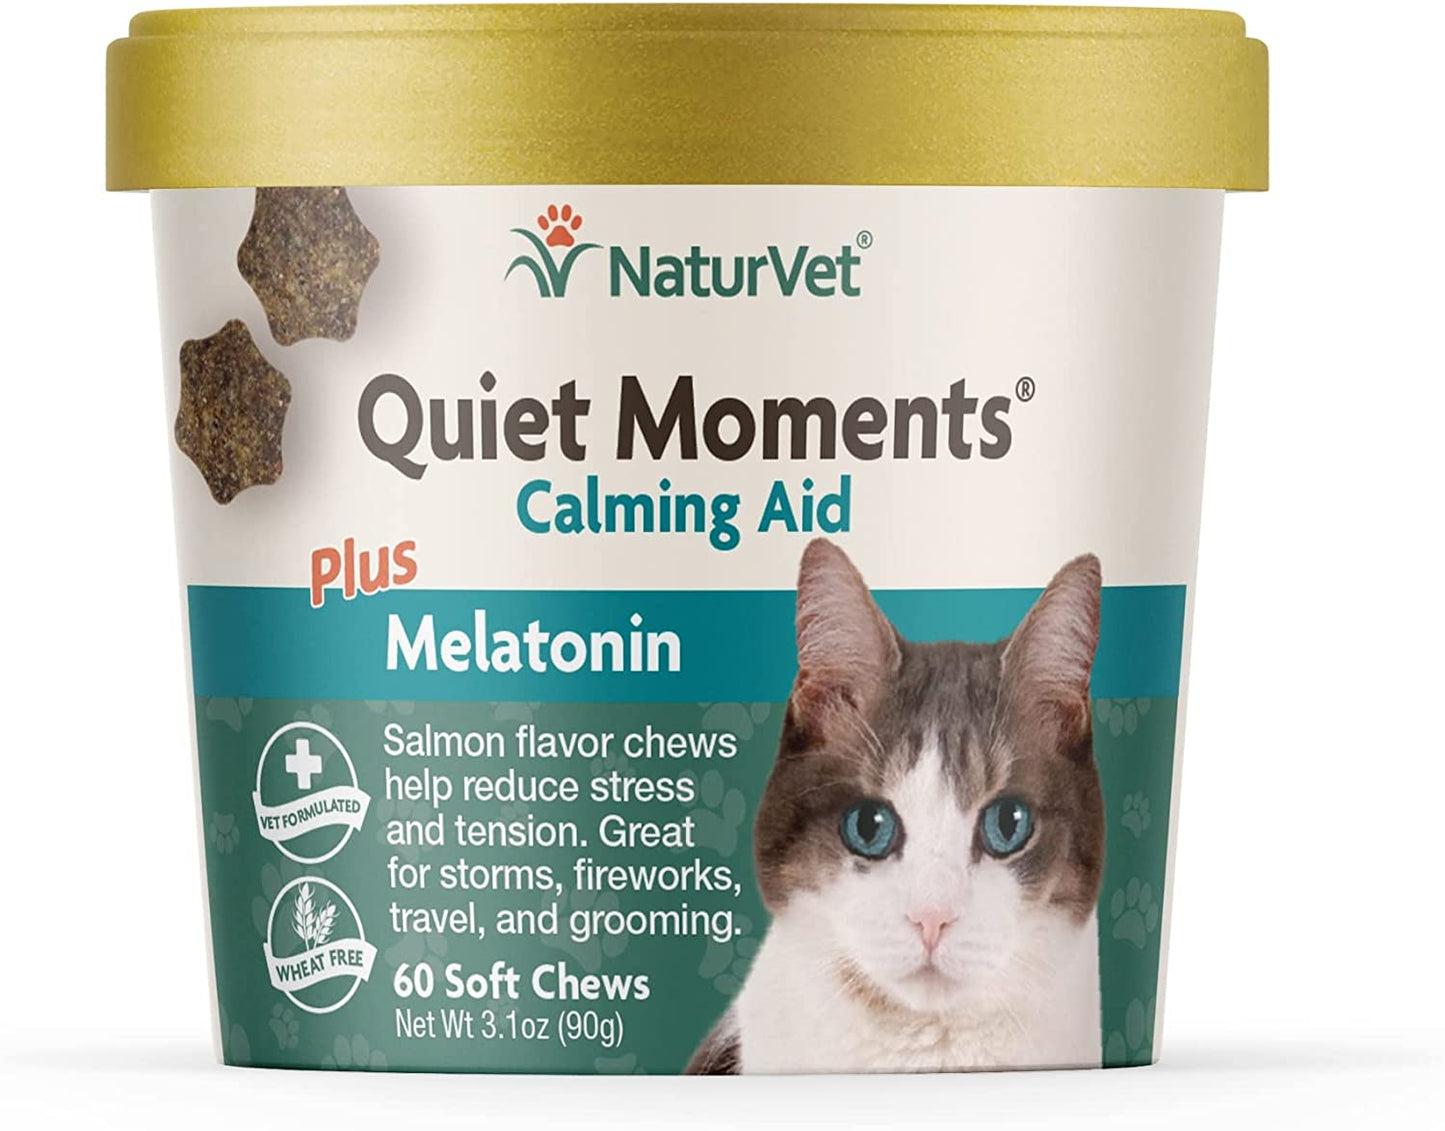 NaturVet Cat Quiet Moments Calming Aid Melatonin 60ct